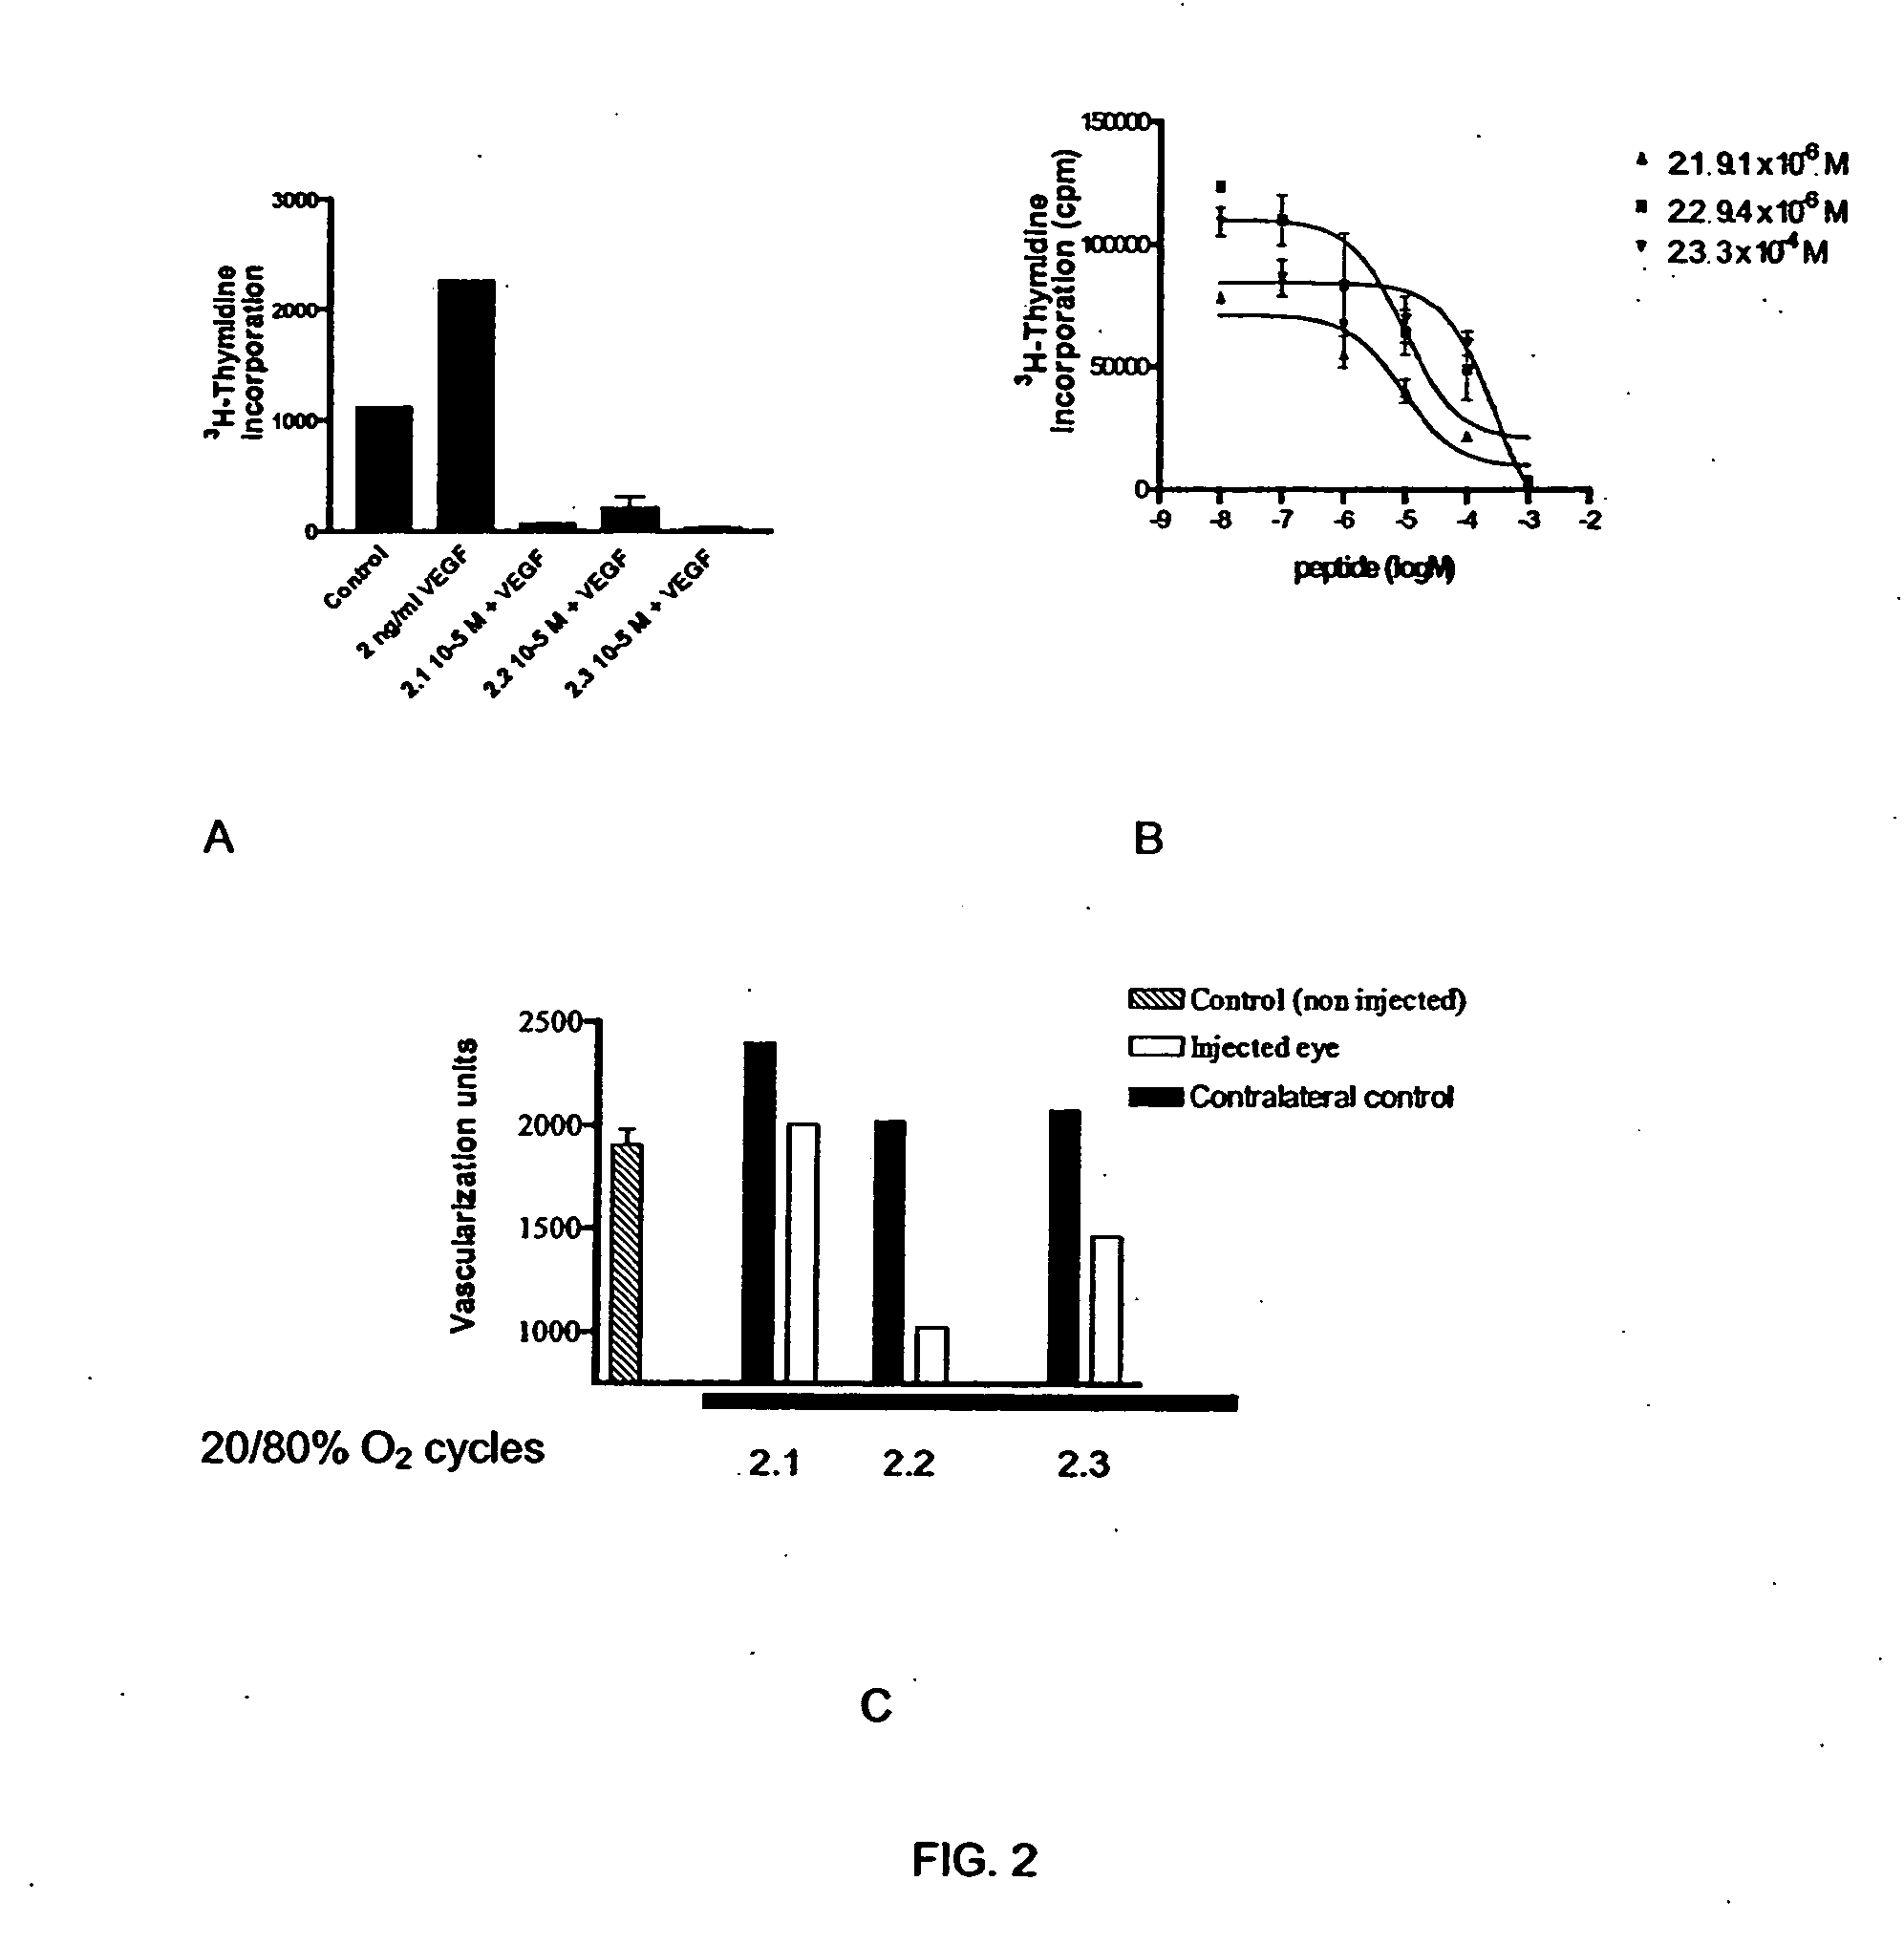 Cytokine receptor modulators, method of identifying same, and method of modulating cytokine receptors activity with same